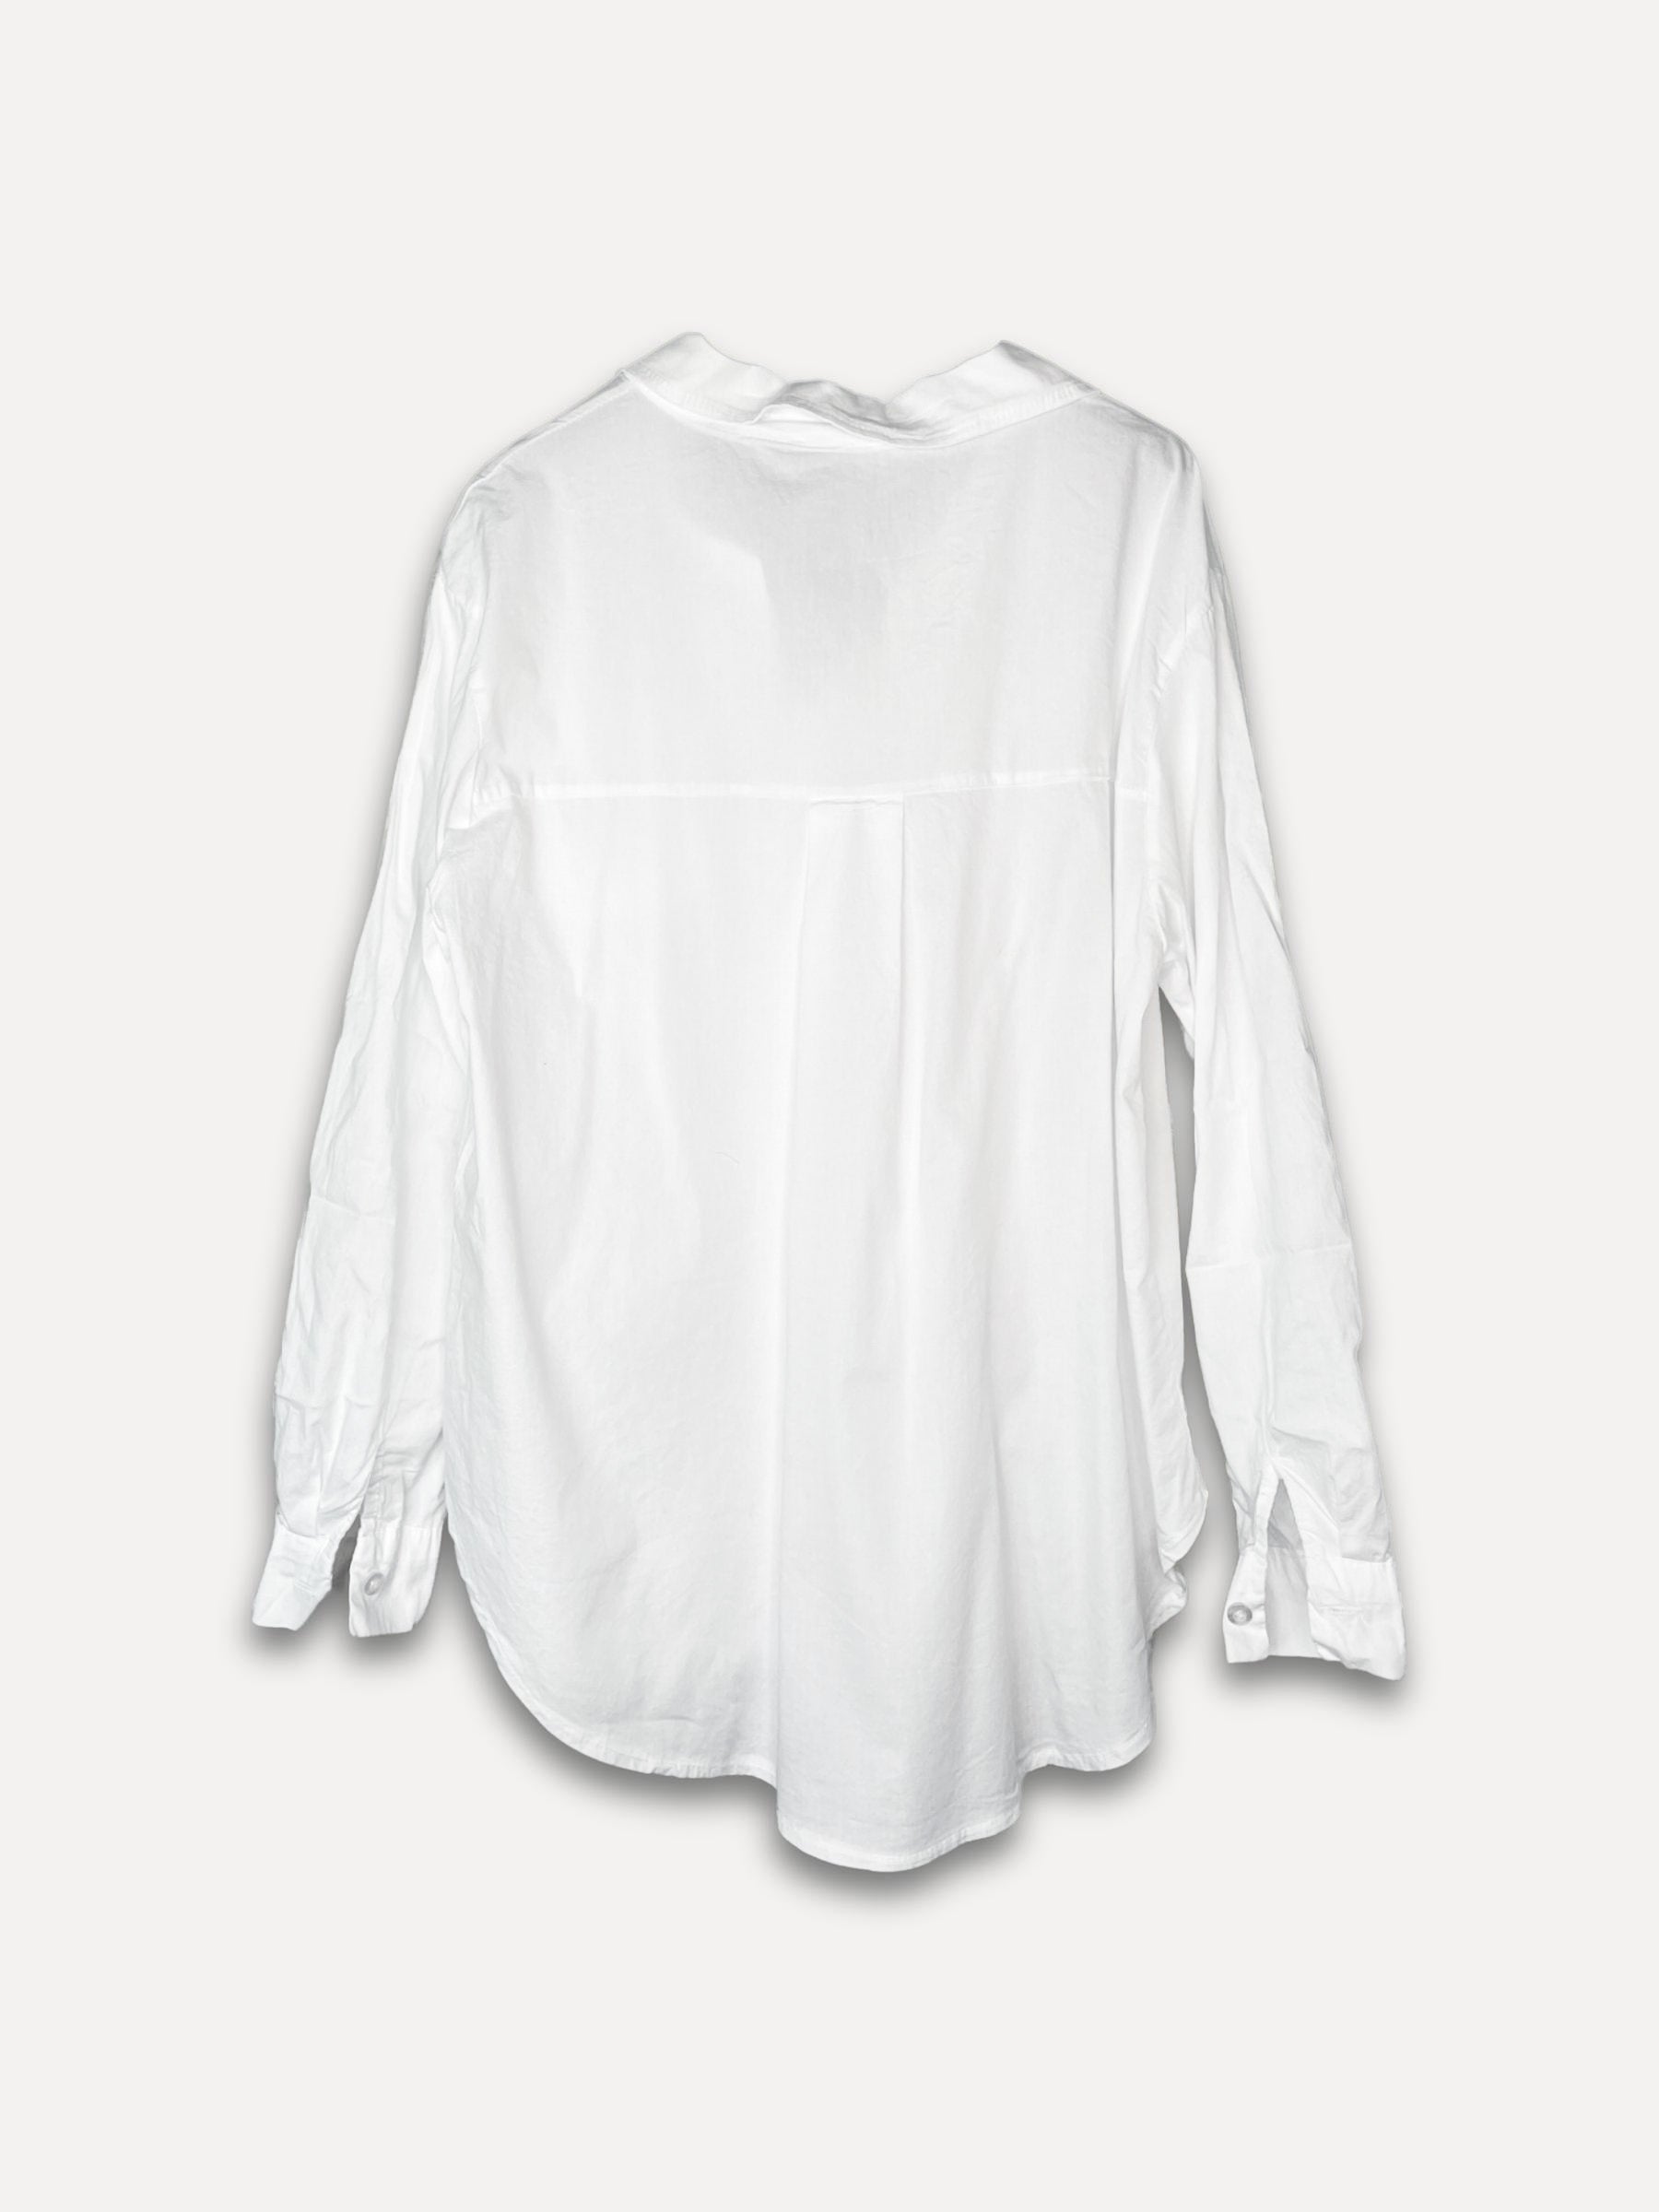 GARDENIA Shirt, White